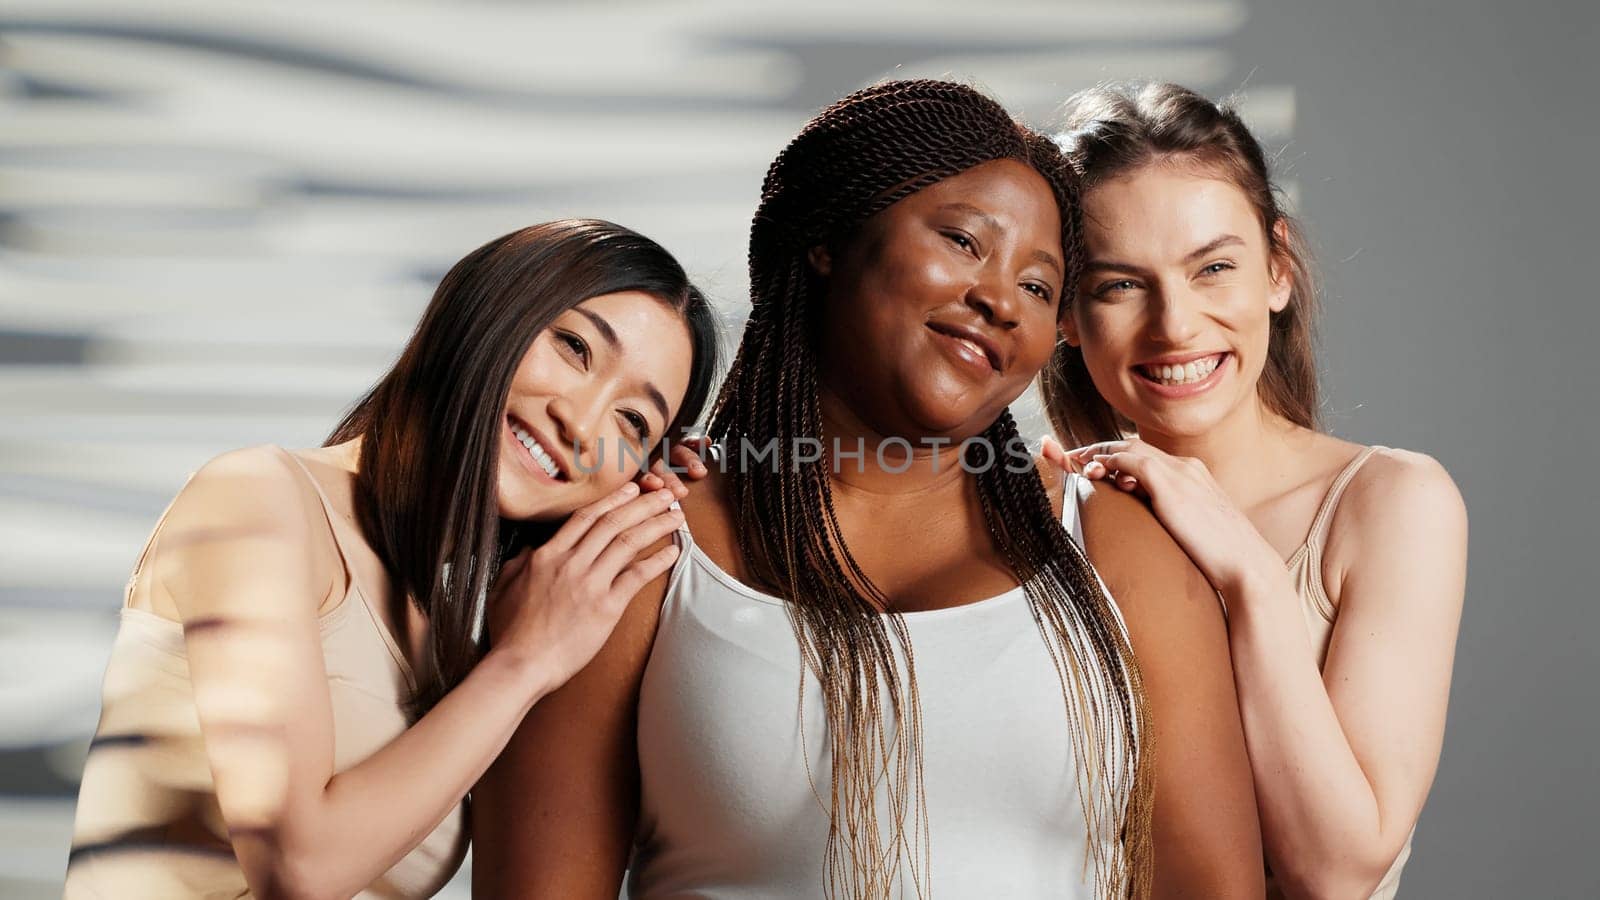 Multiethnic group of women promoting body positivity by DCStudio